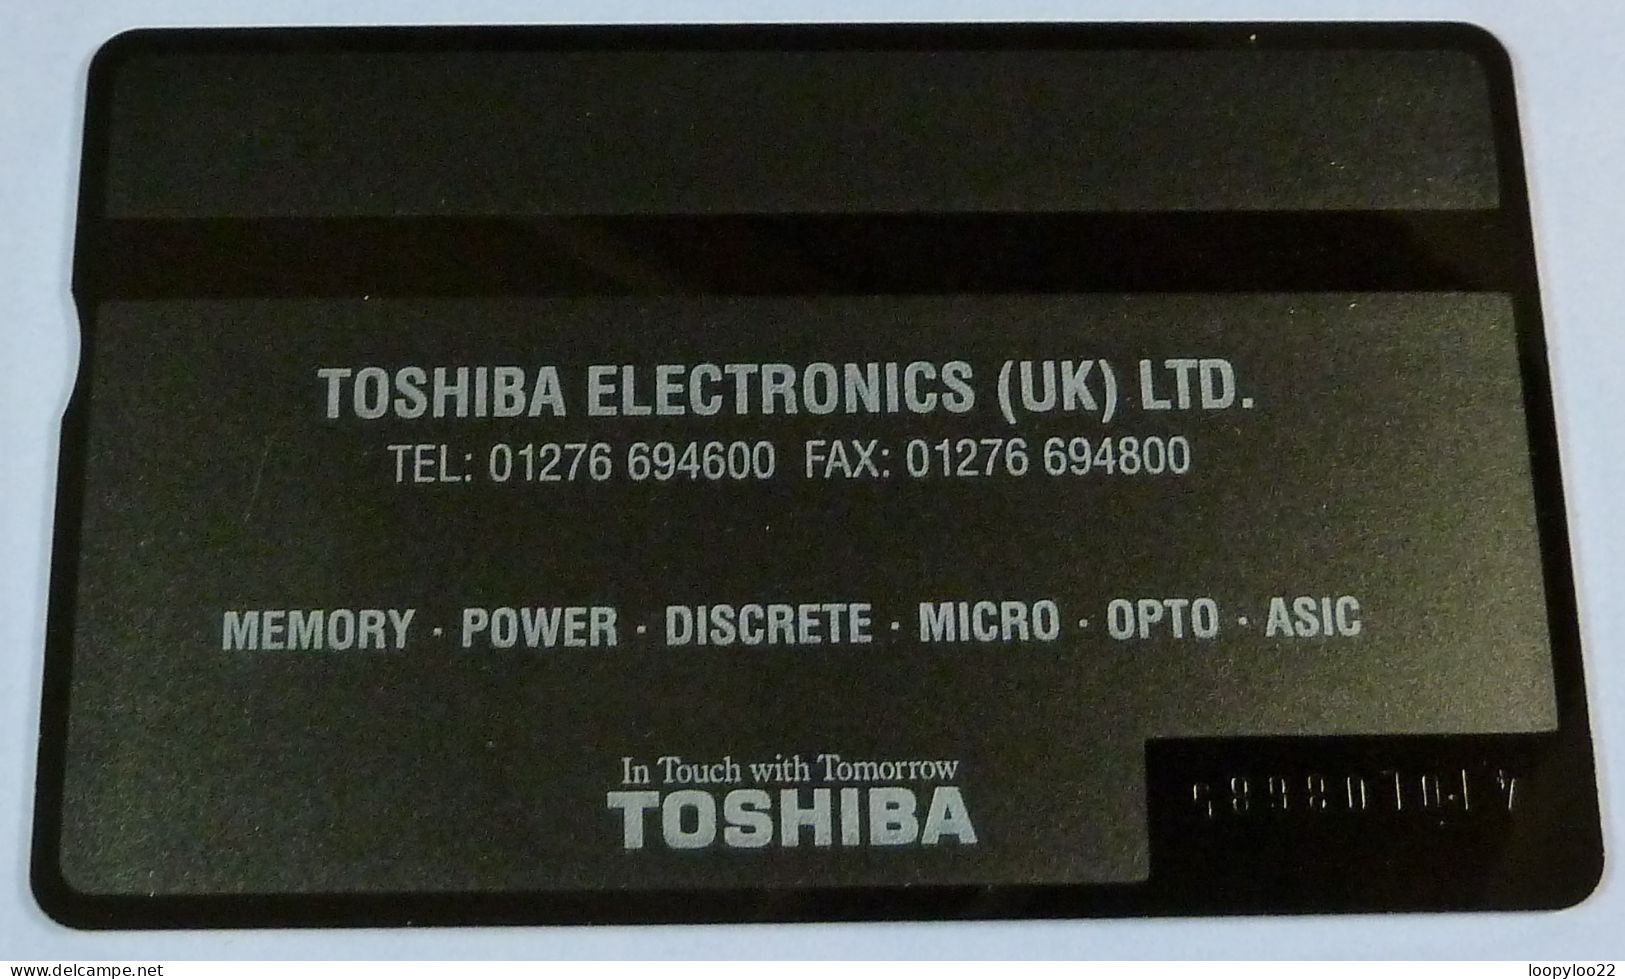 UK - Great Britain - BT - BTP308 - 410L - TOSHIBA - Get The Edge In Asic - 2000ex - Mint - BT Promotional